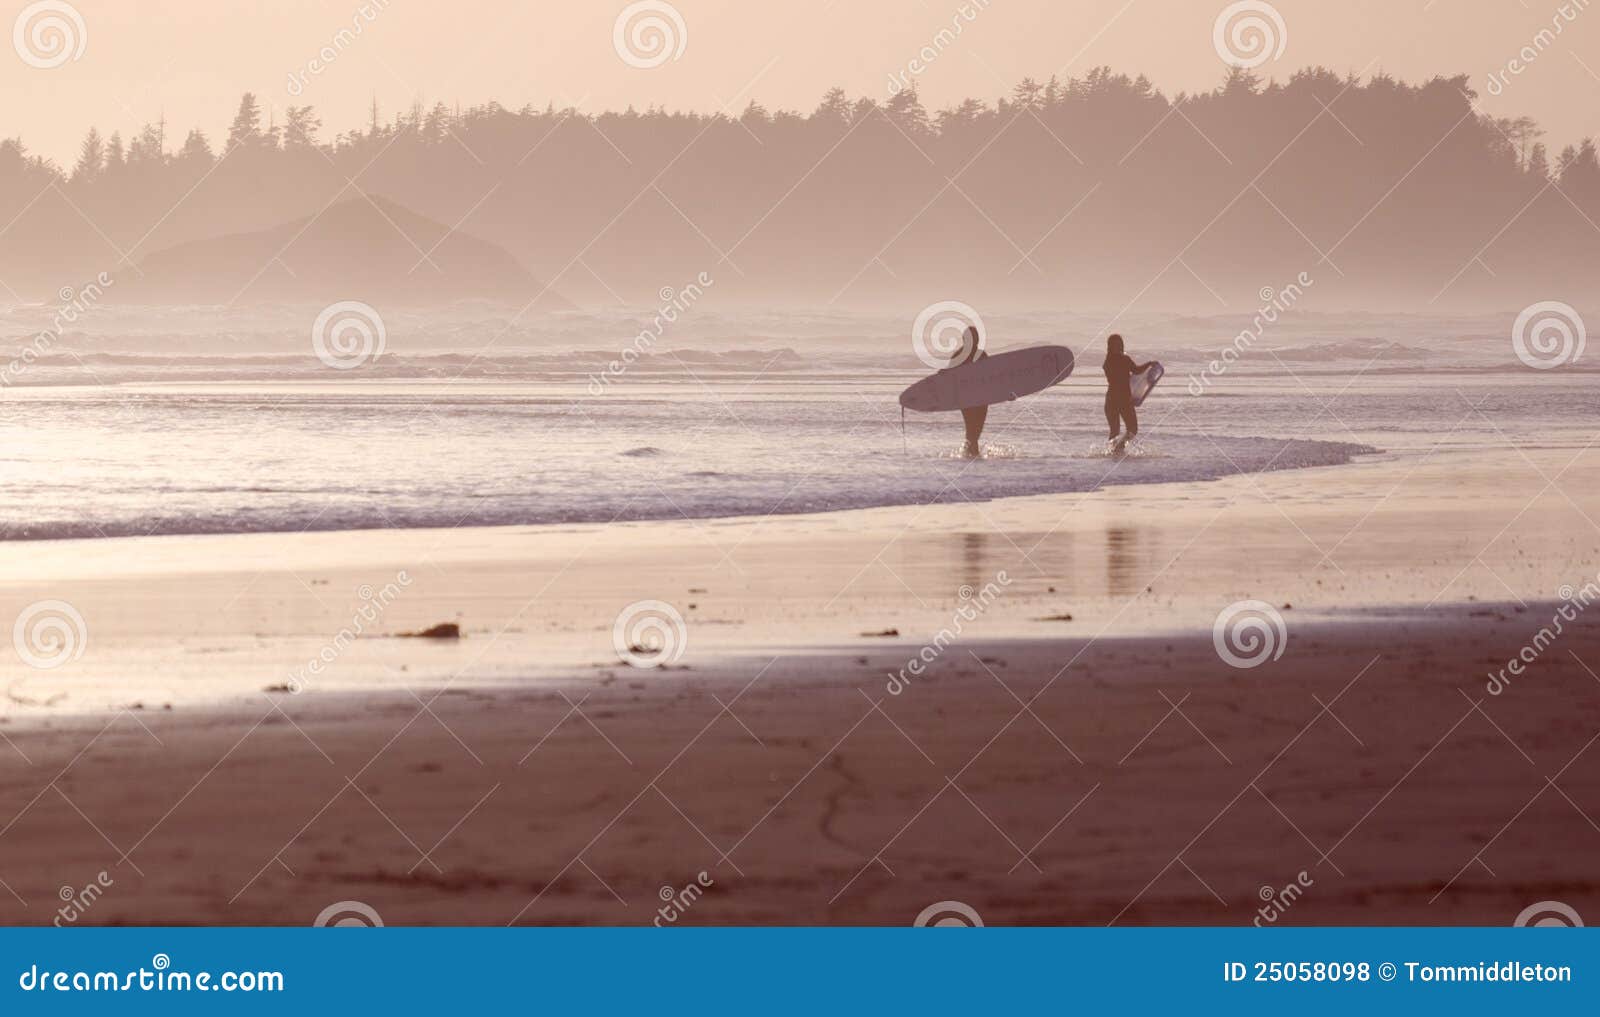 tofino surfers at sunset